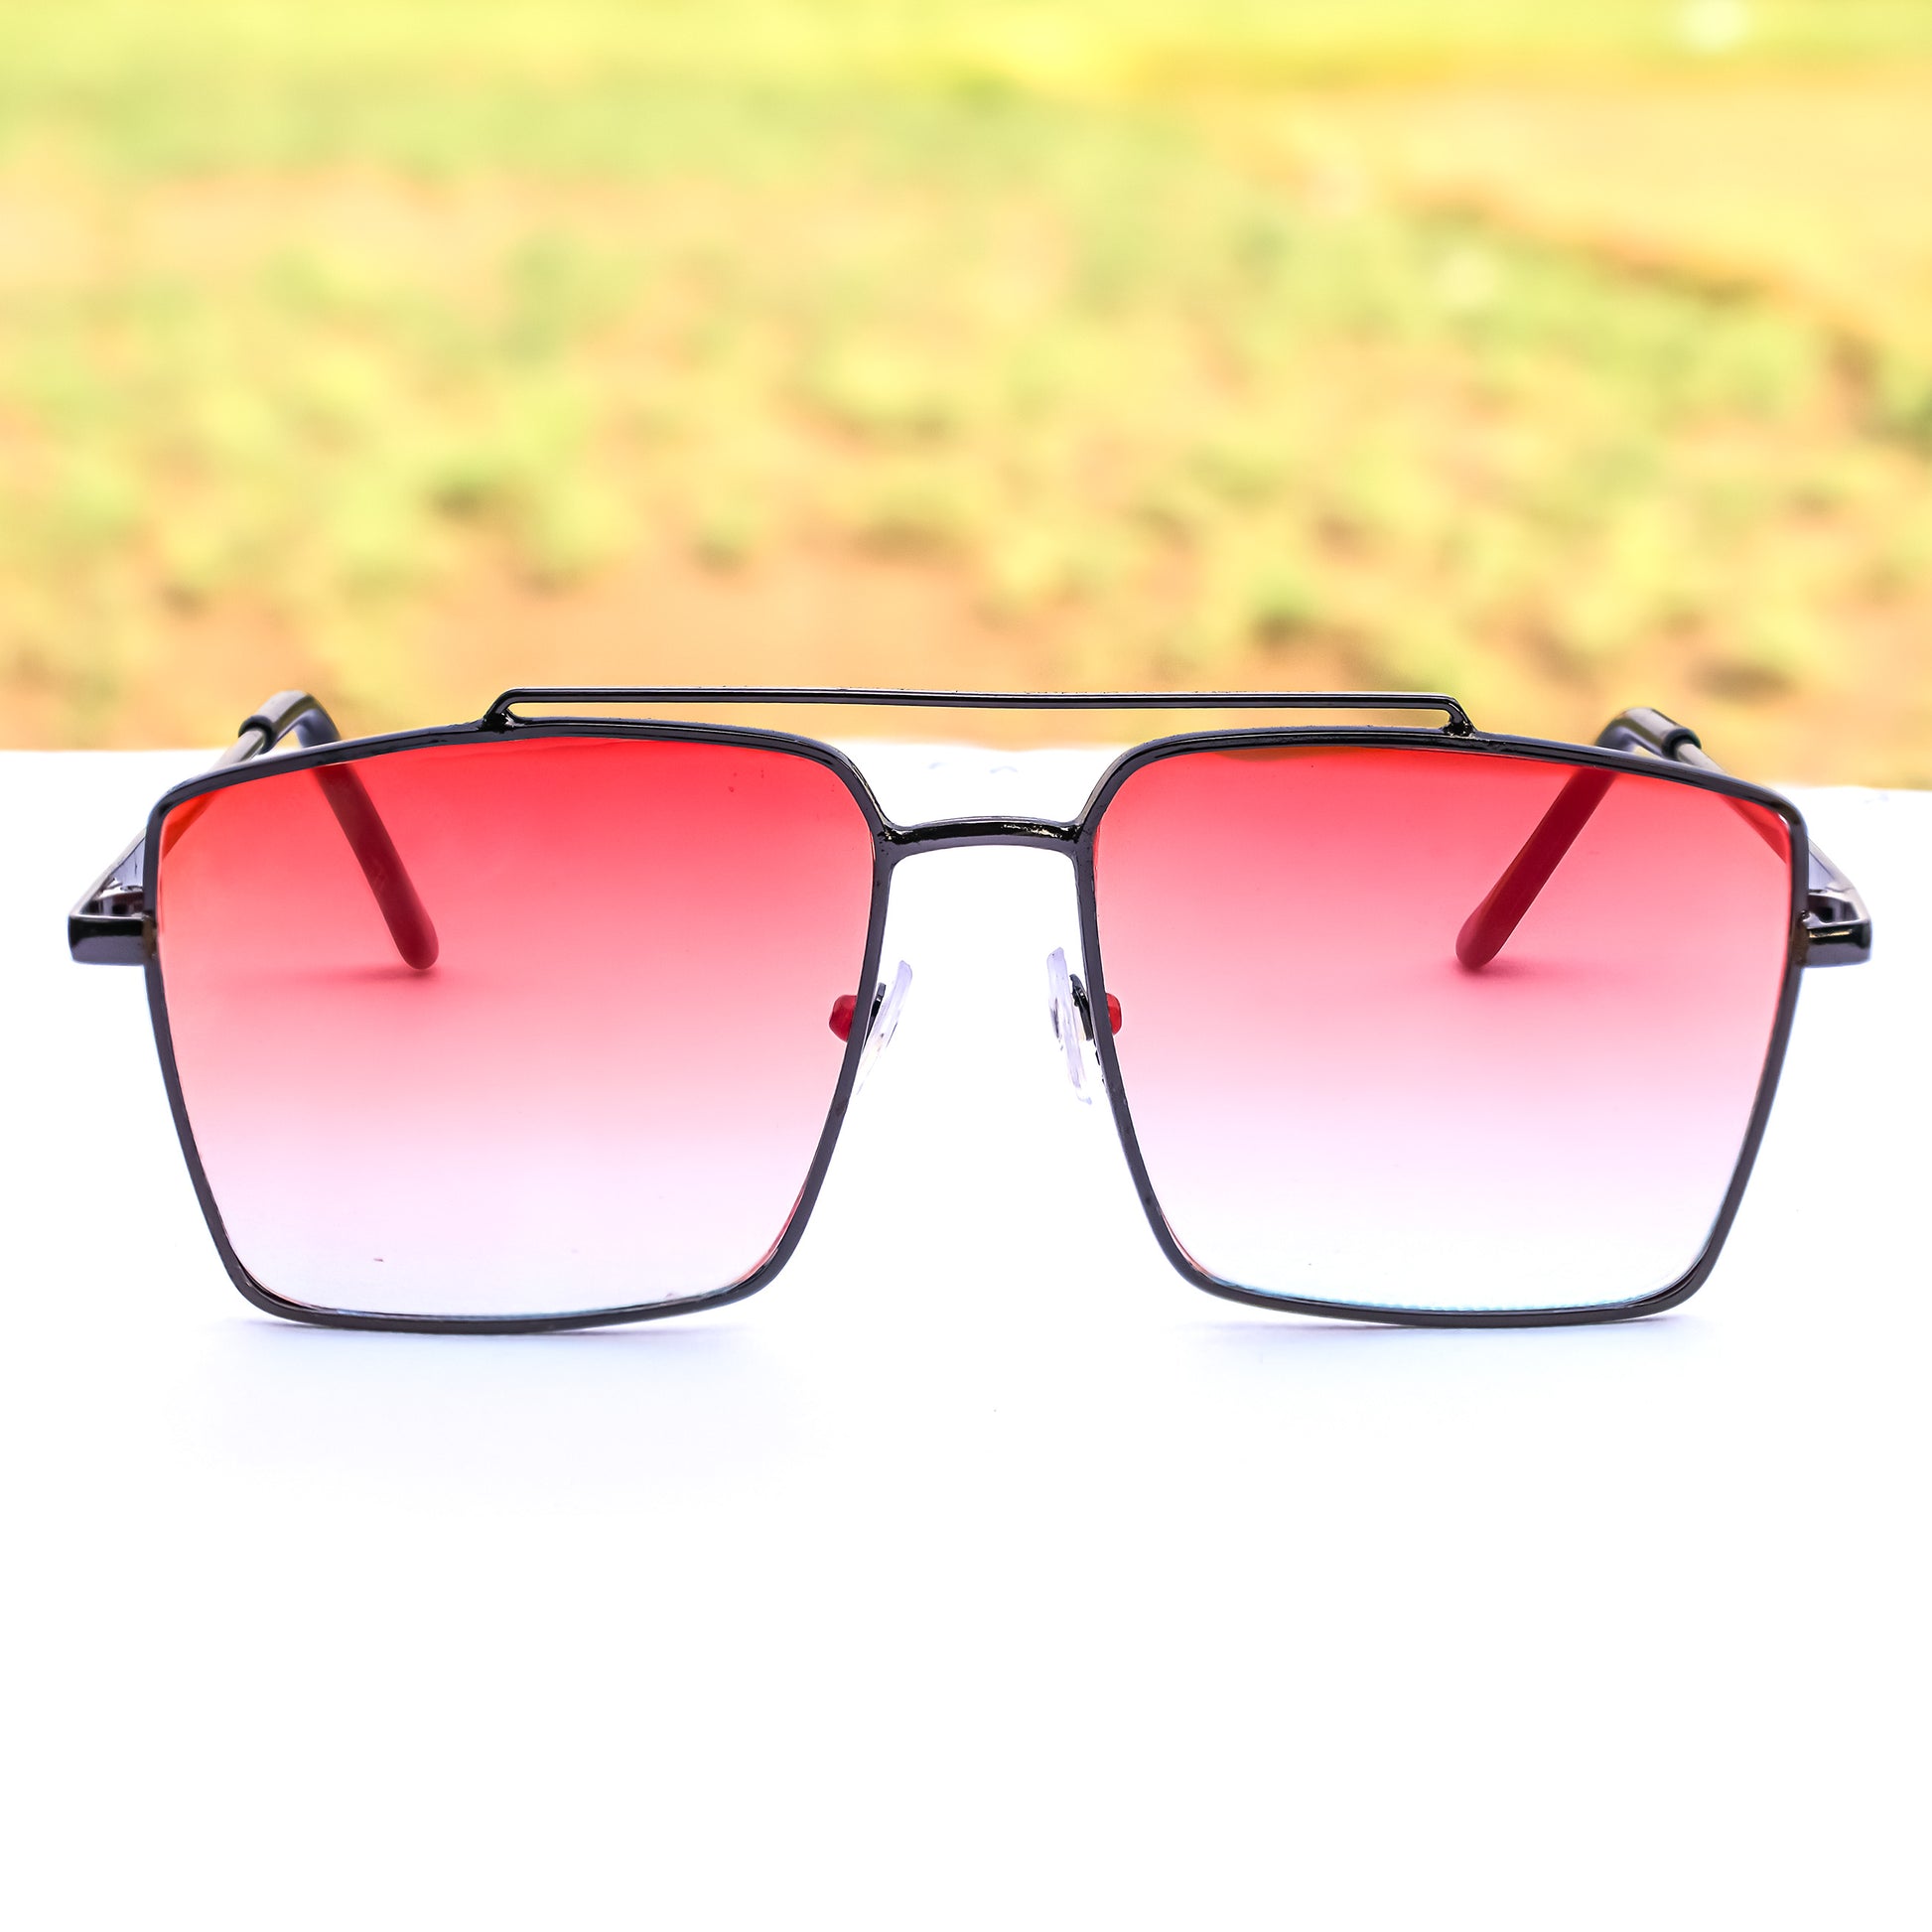 Jiebo Red Full Rim Square Men's Sunglasses